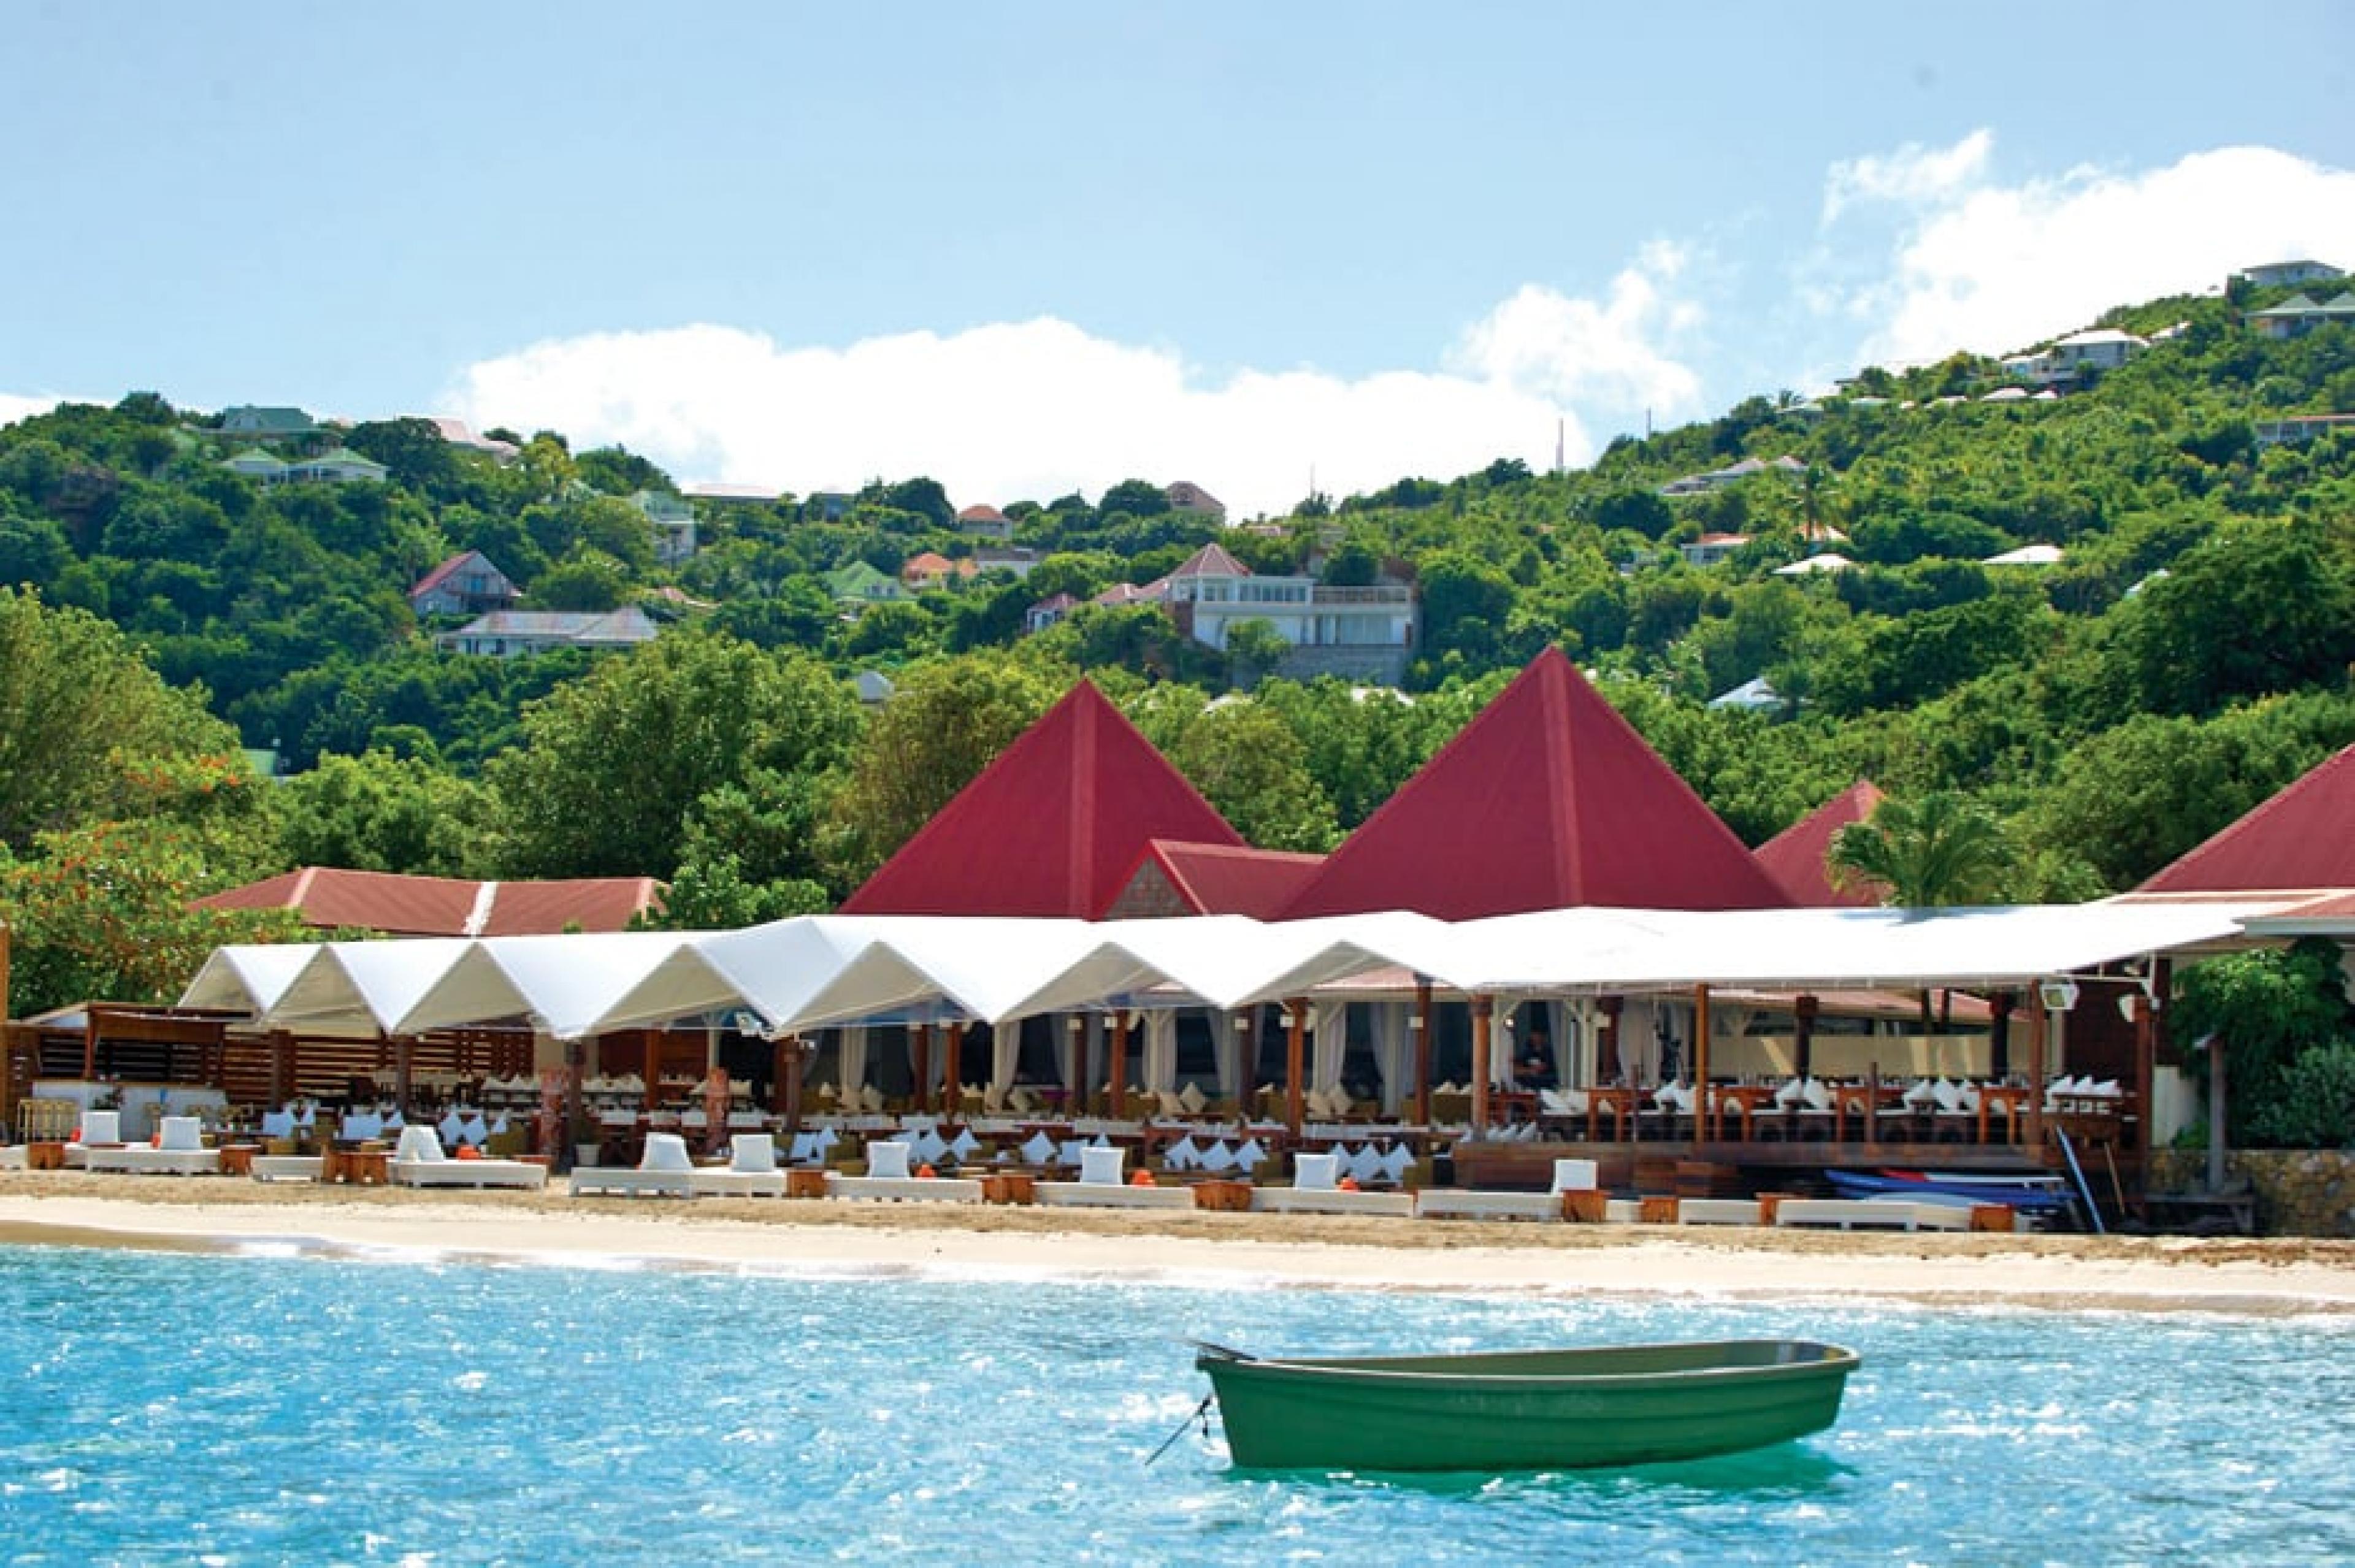 Beach Lounge at Nikki Beach, St. Barth's, Caribbean